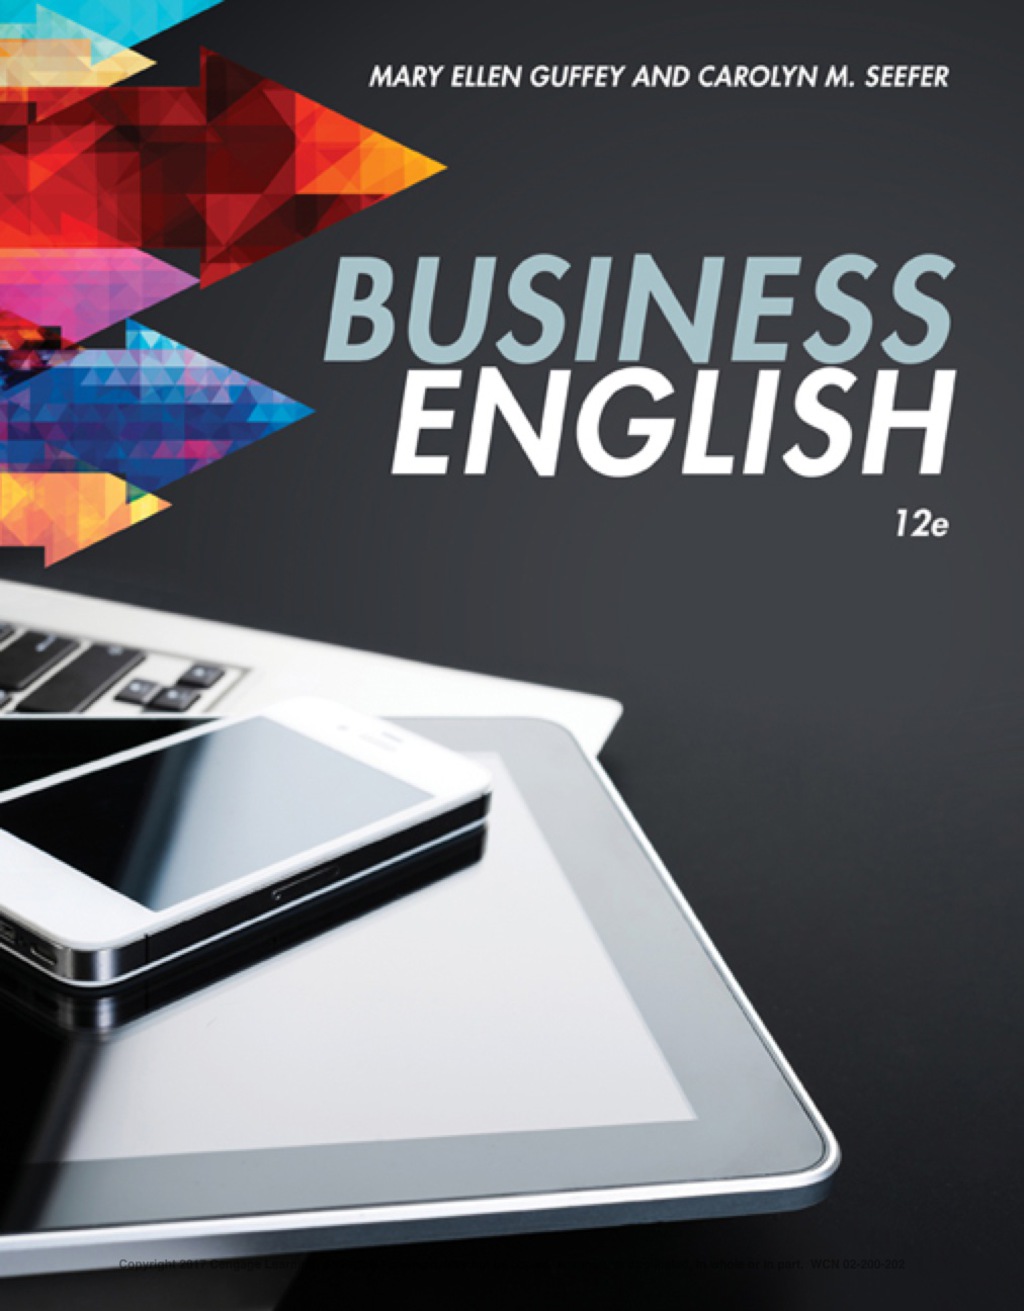 Business English (eBook Rental)